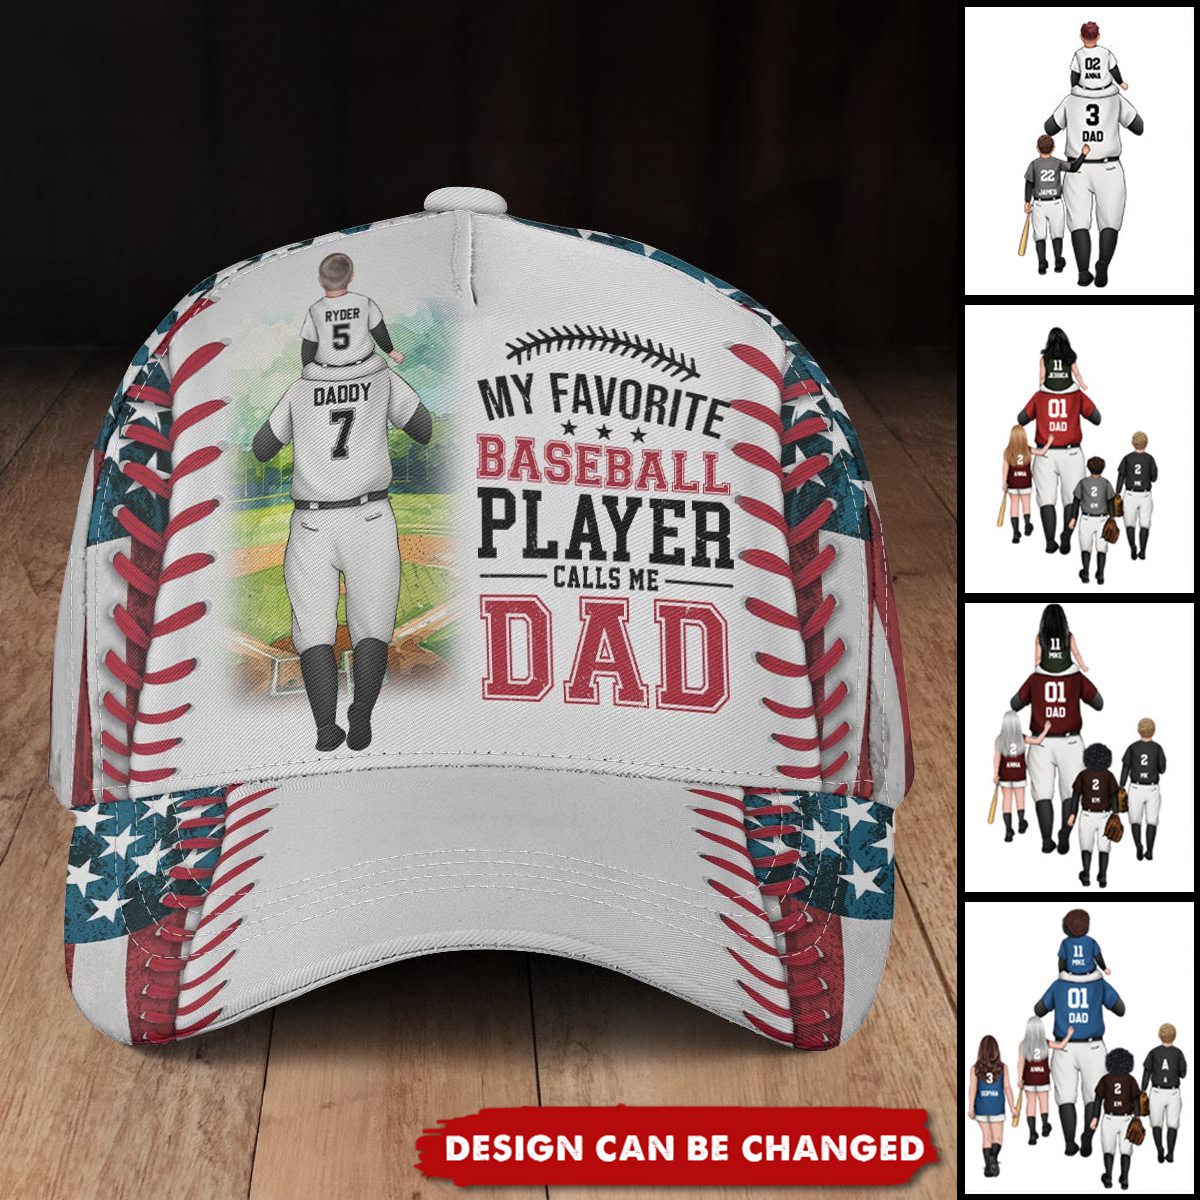 My Favorite Player Calls Me Dad/Grandpa - Personalized Baseball Kids & Dad/Grandpa Classic Cap